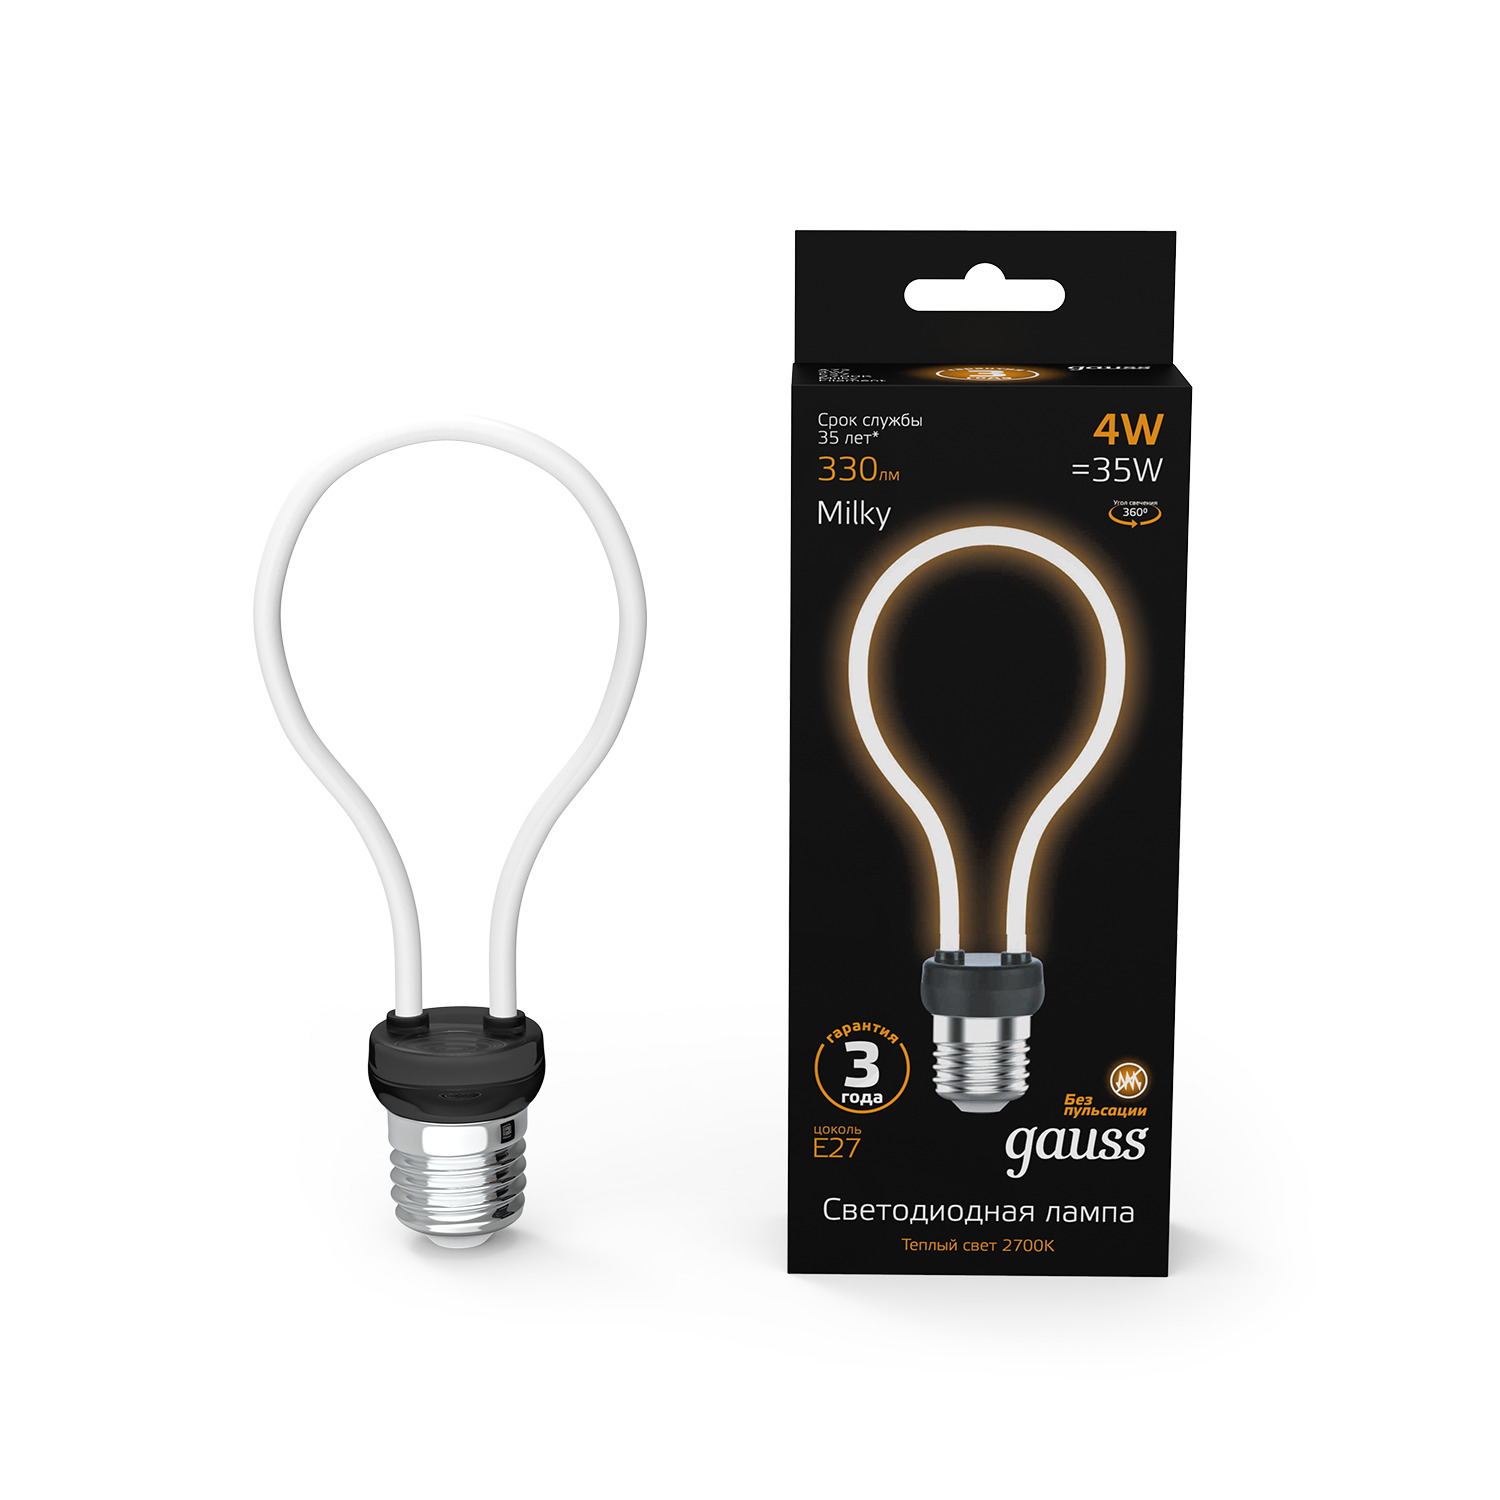 Лампа Gauss LED Filament Bulbless A72 Milky E27 4W 330 Лм 2700K 72x160мм лампа gauss led filament bulbless a72 milky e27 4w 330 лм 2700k 72x160мм